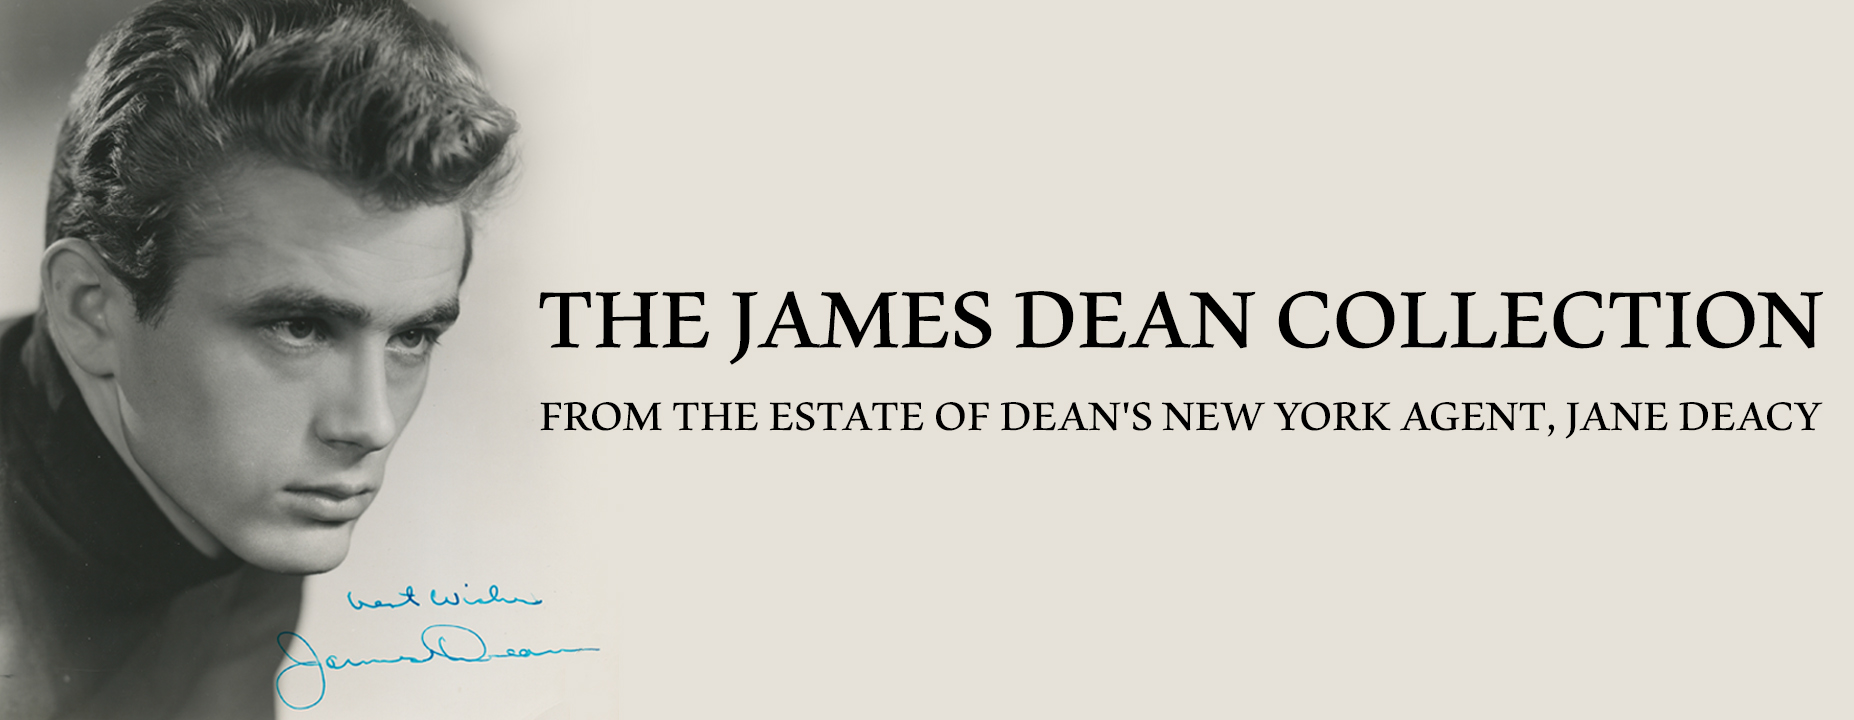 James dean collection